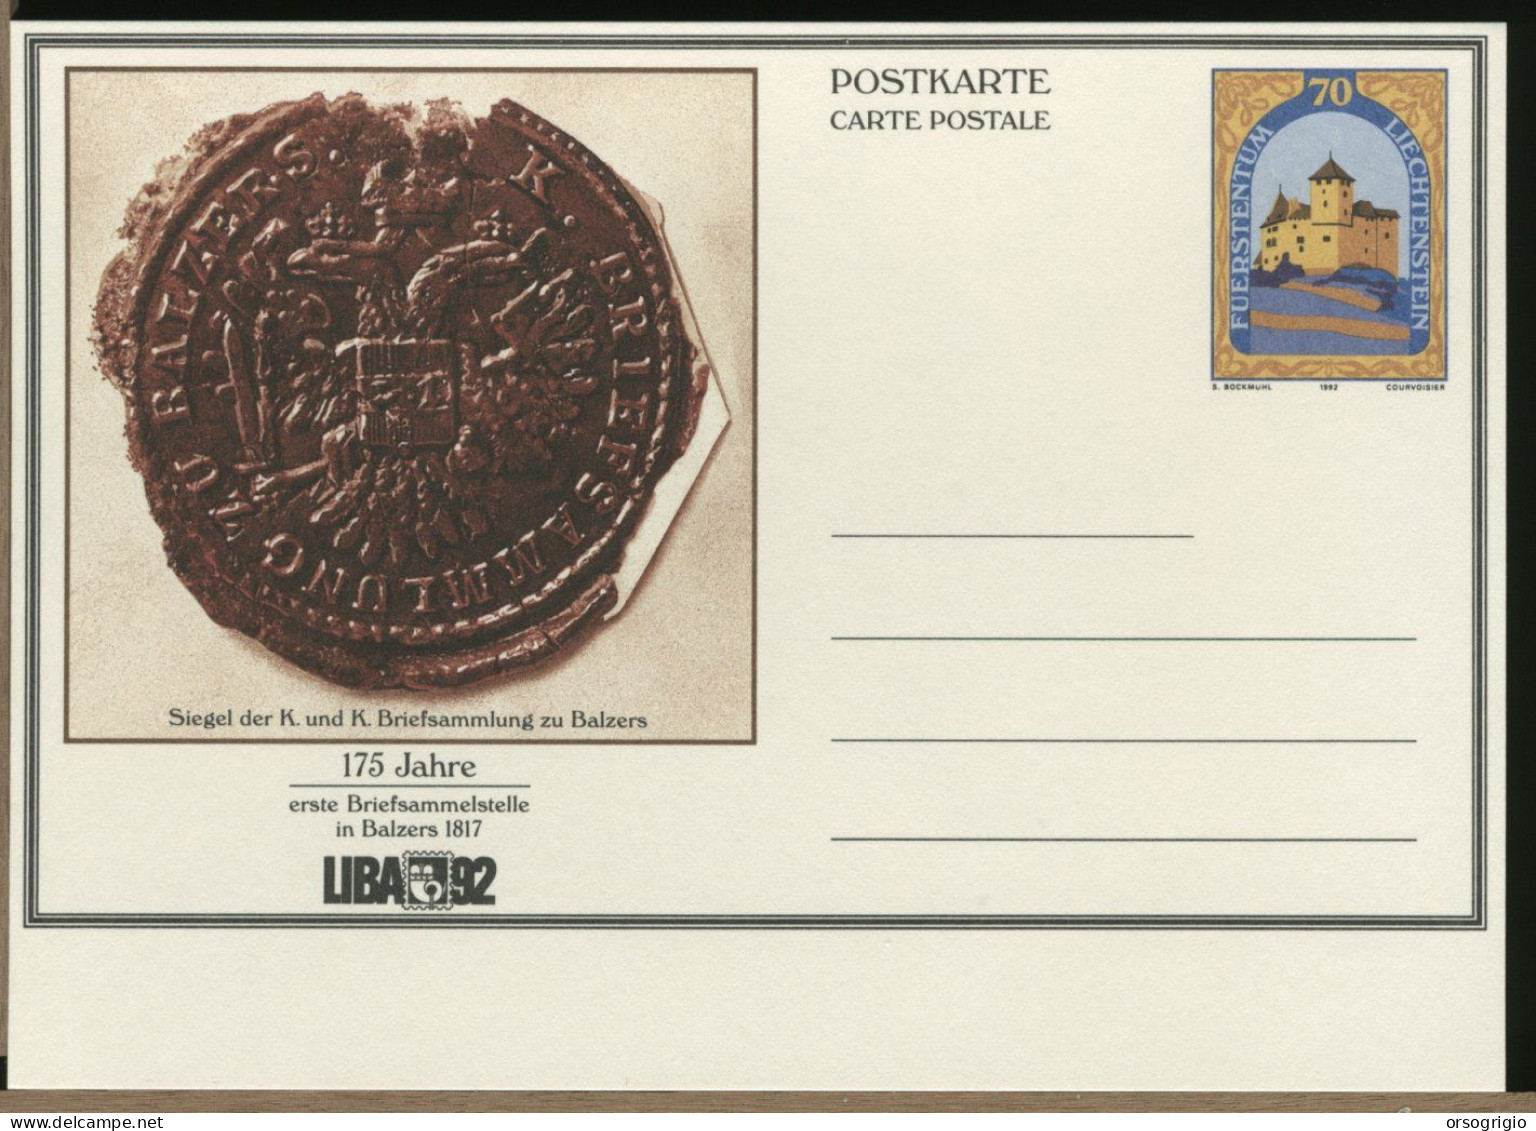 LIECHTENSTEIN - Cartolina Intero Postale - POSTKARTE - BALZERS - LIBA 1992 - Entiers Postaux